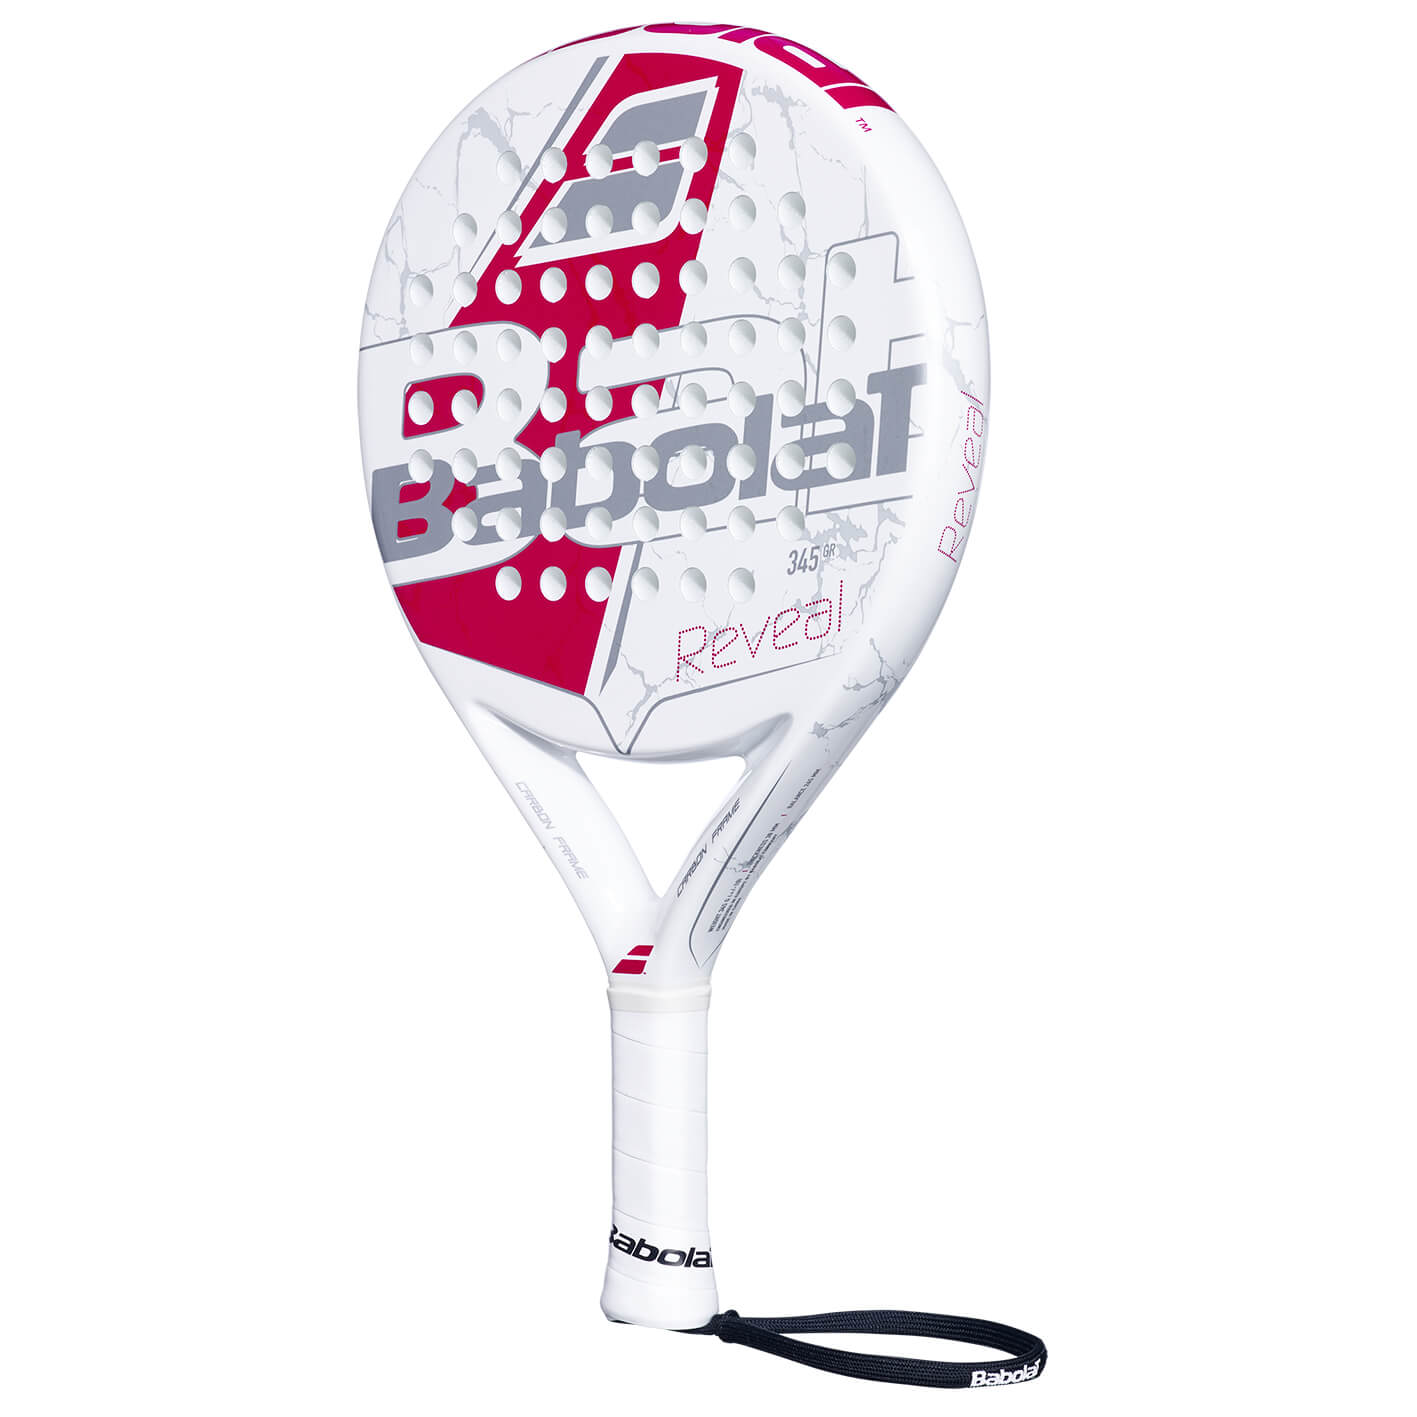 Babolat Reveal racket